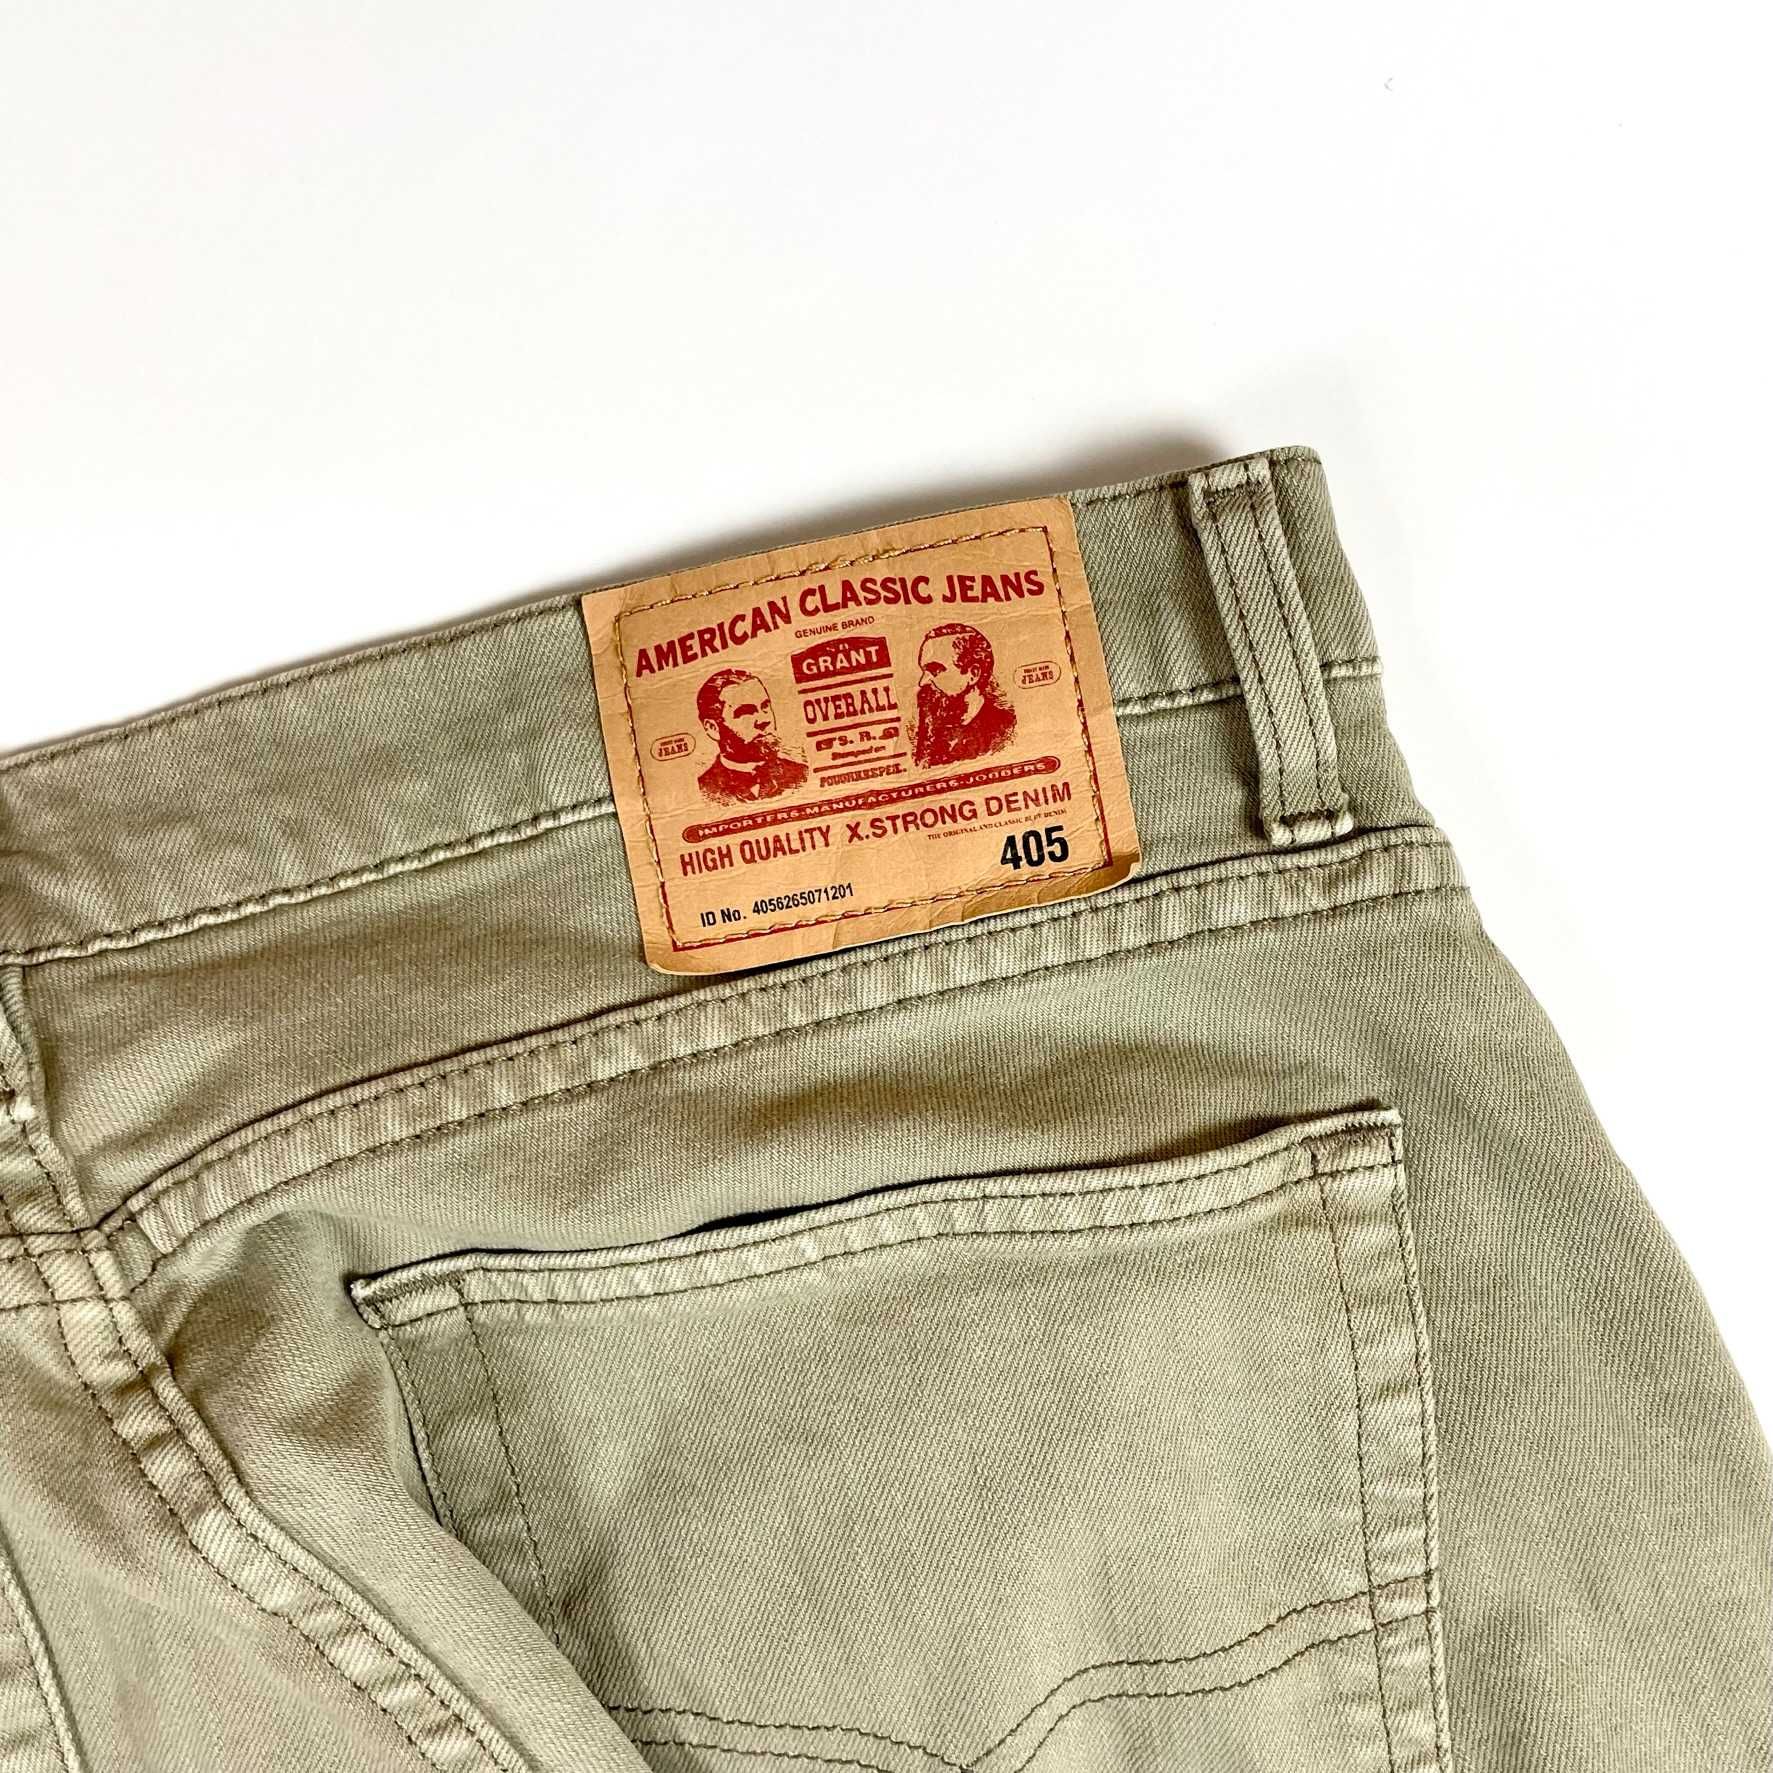 Grant 505 American Classic Jeans spodnie jeansowe vintage denim